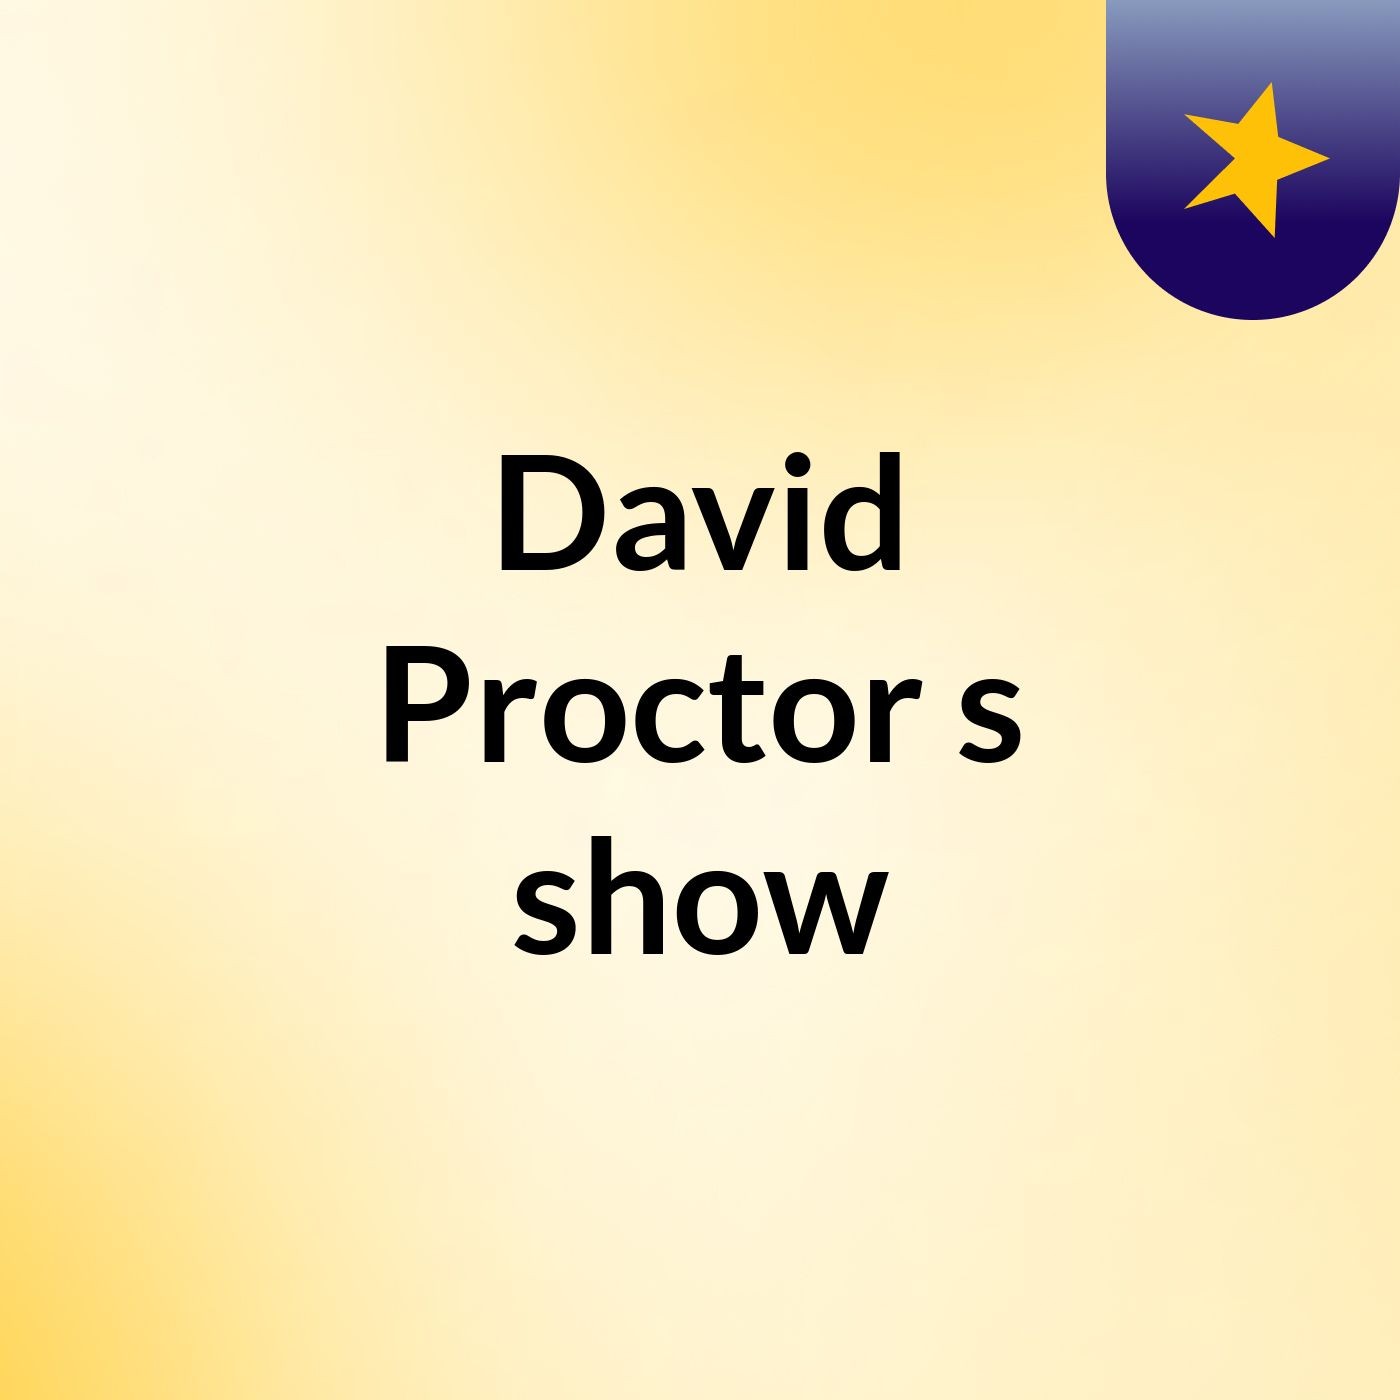 David Proctor's show